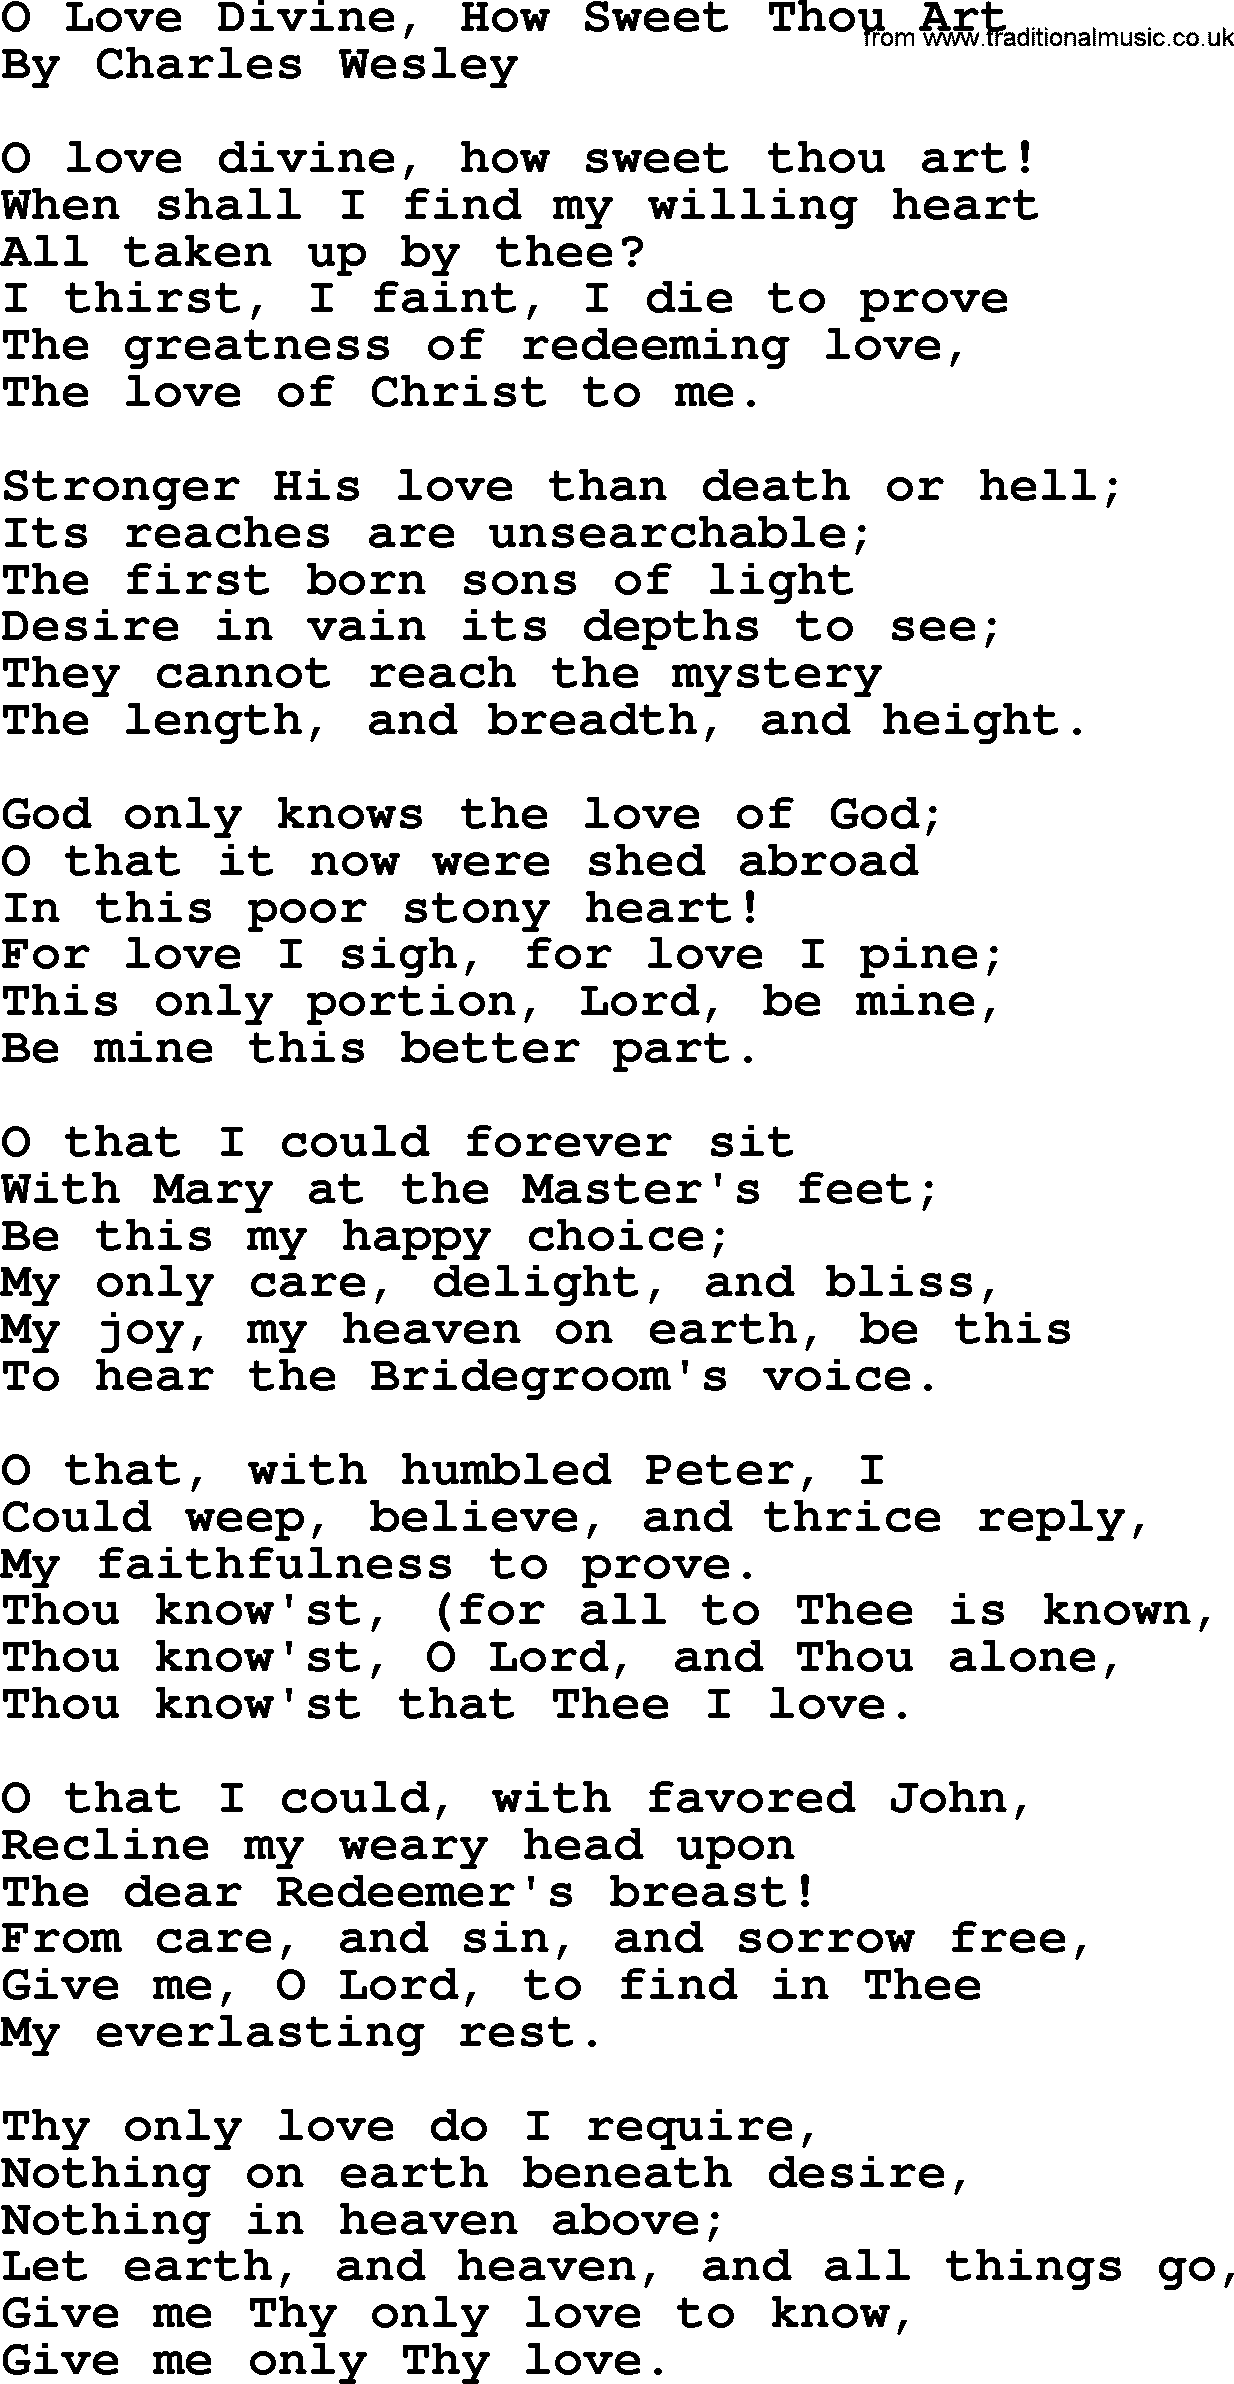 Charles Wesley hymn: O Love Divine, How Sweet Thou Art, lyrics